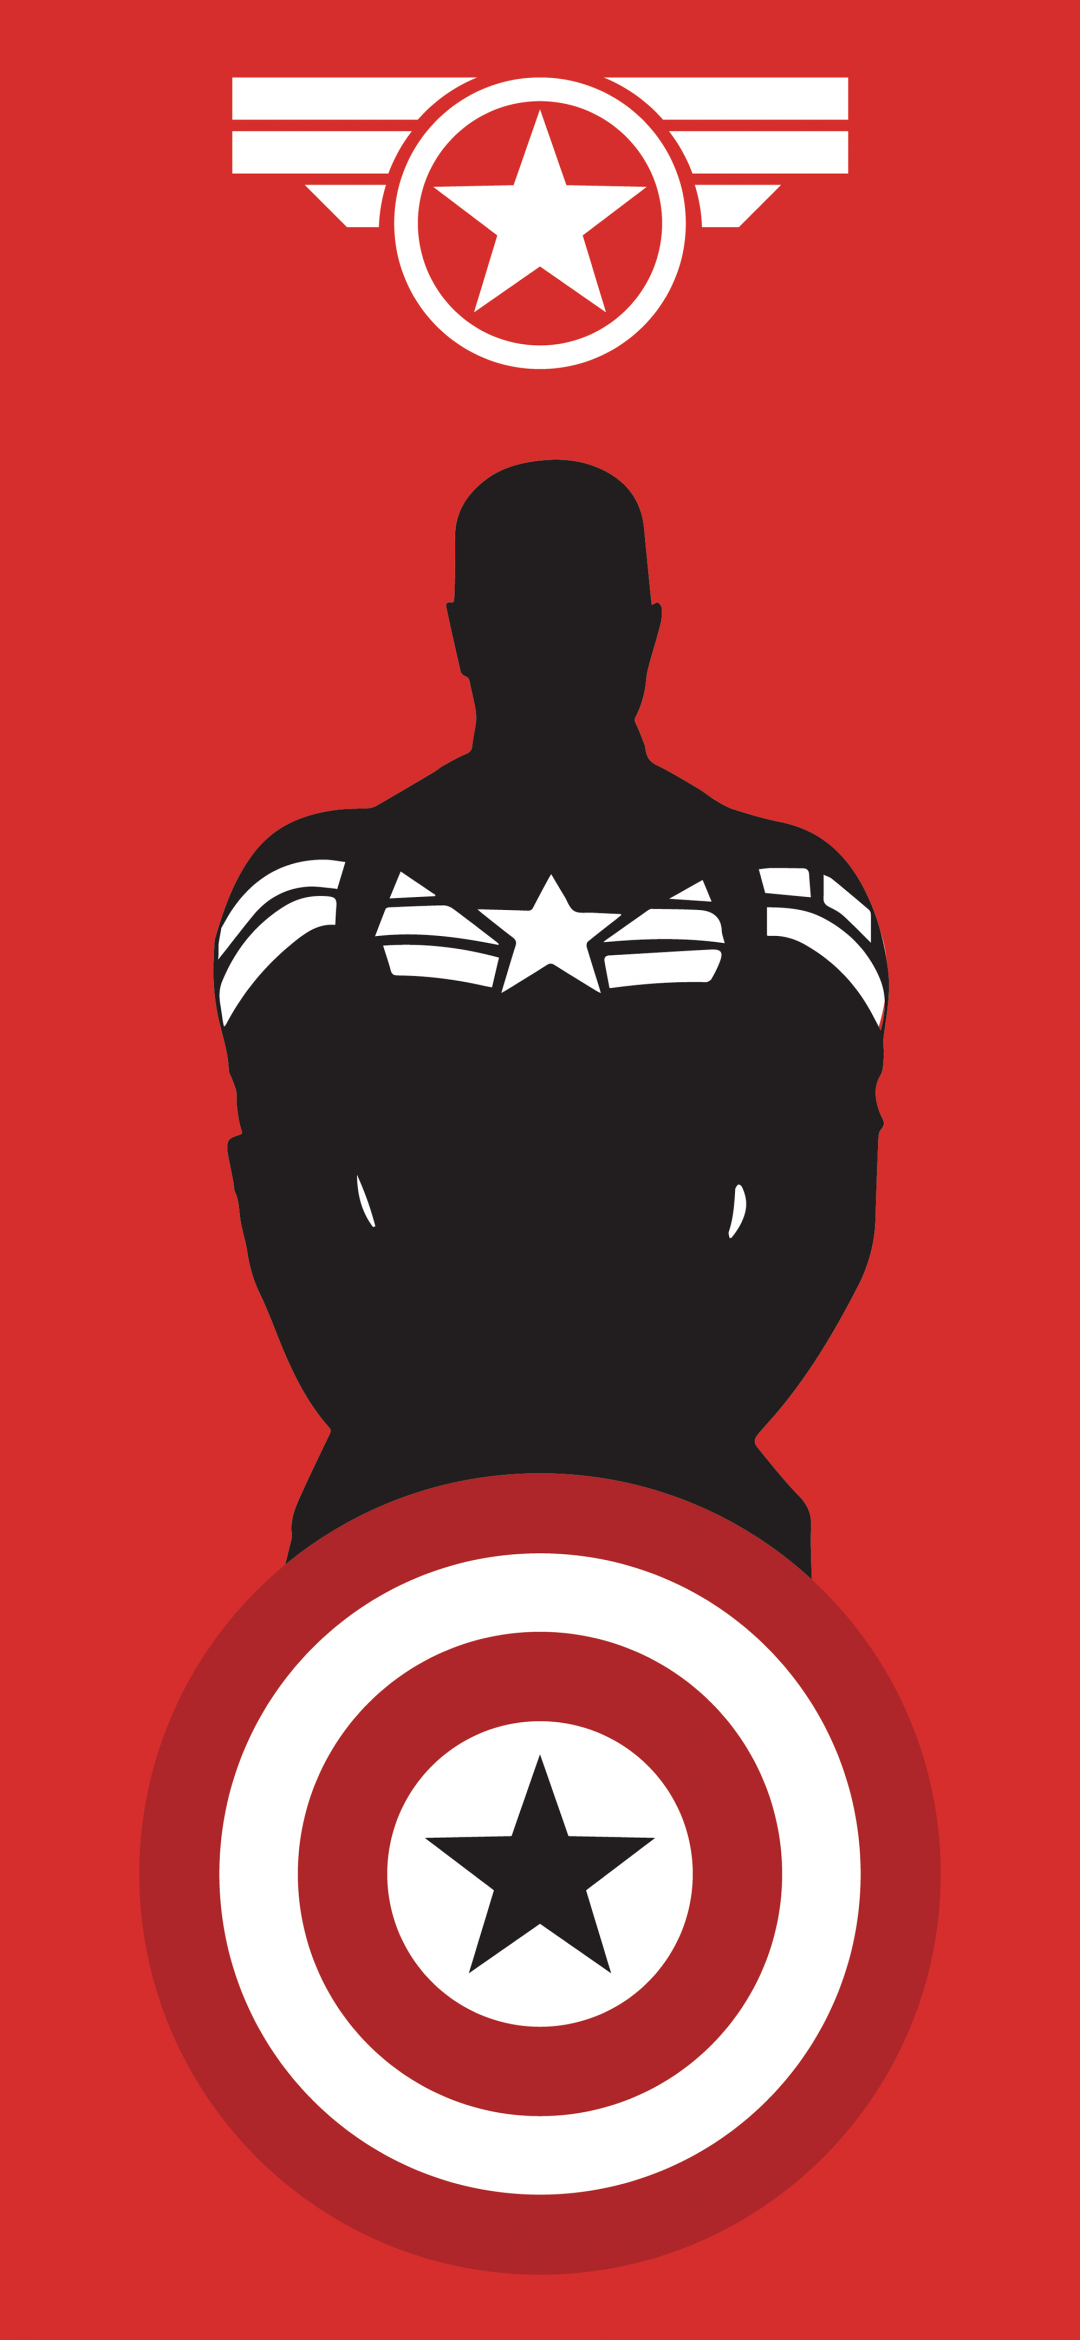 Captain America Wallpaper 4K, Marvel Superheroes, Minimal art, Red background, Minimal